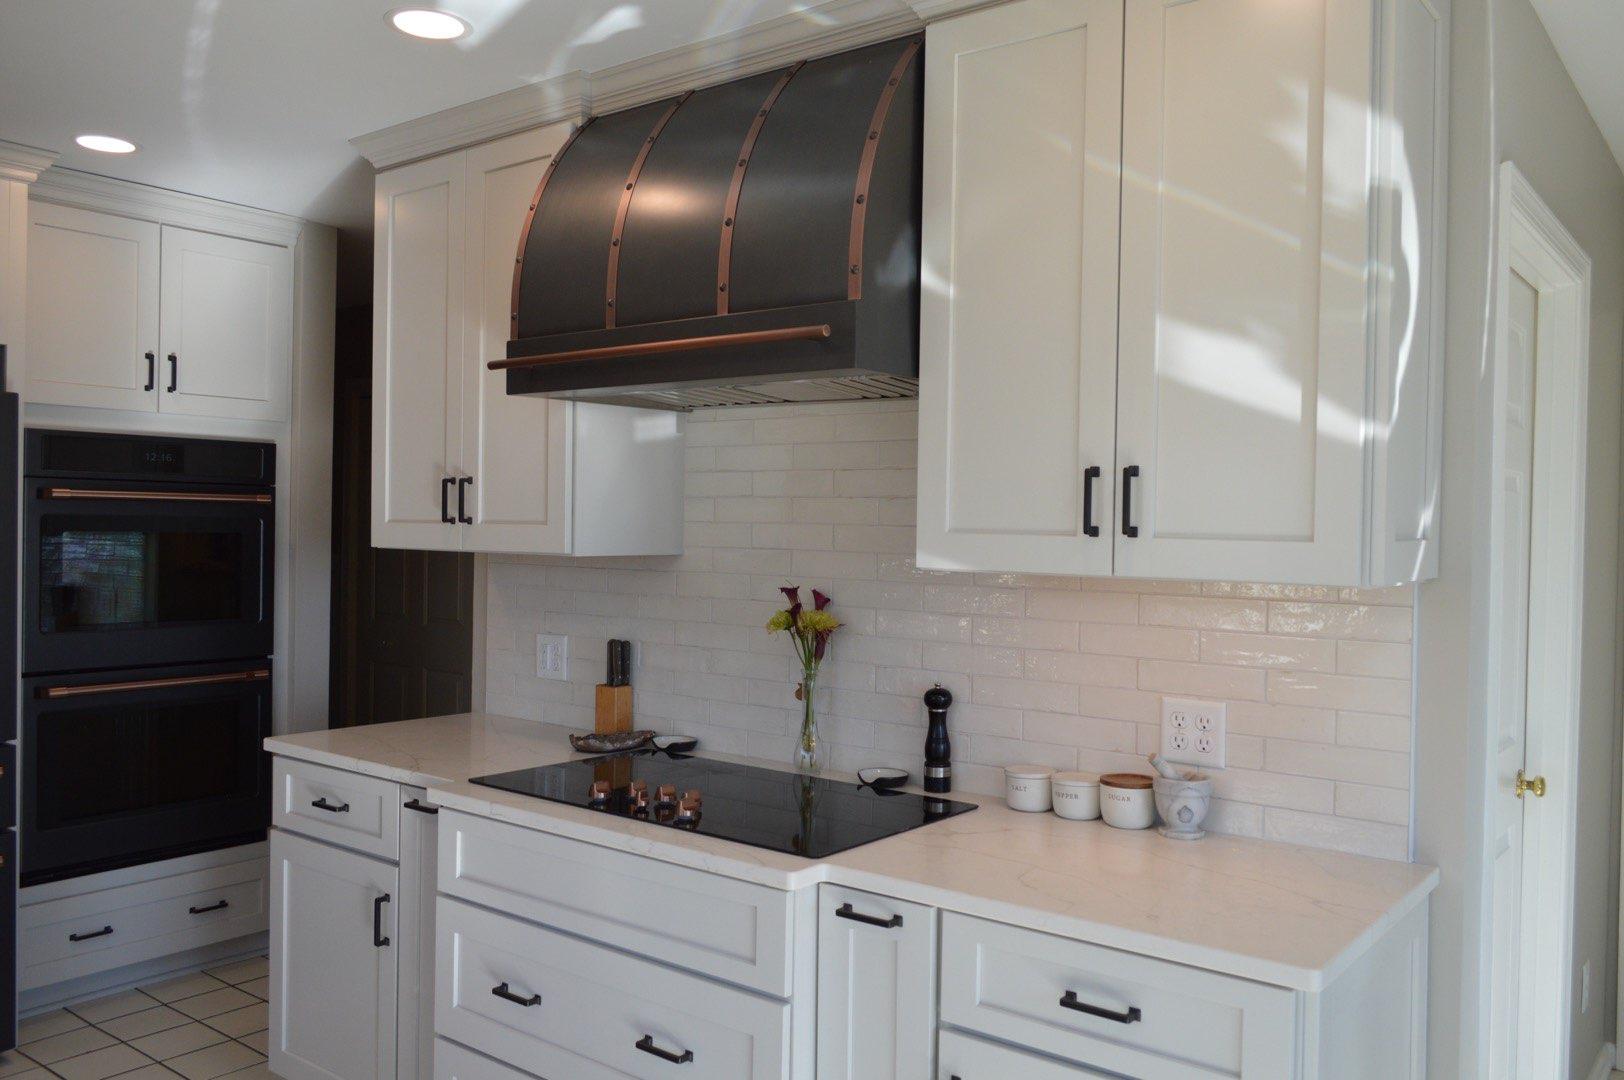 Amazing cottage kitchen with white kitchen cabinets, white kitchen countertops, brick backsplash, complemented by a stylish range hood